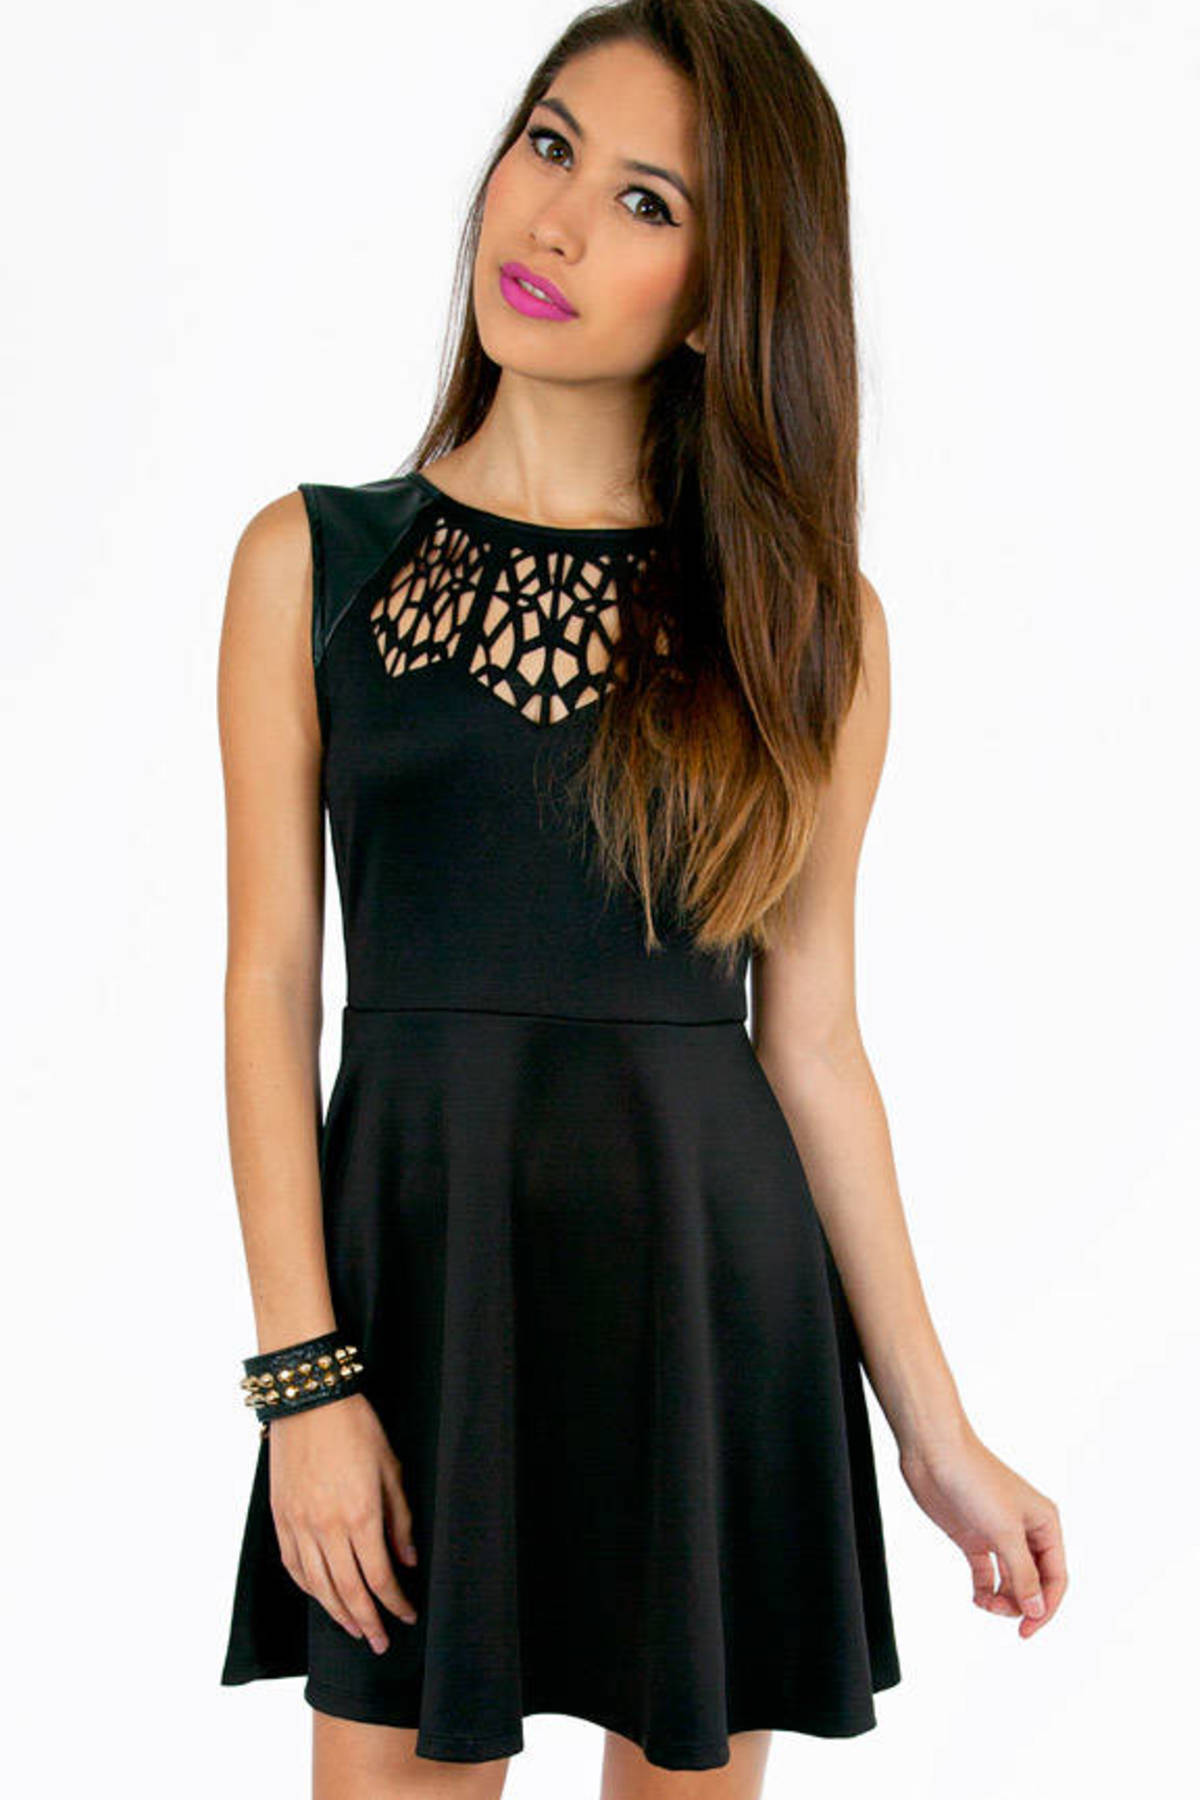 Give It a Twirl Dress in Black - $20 | Tobi US